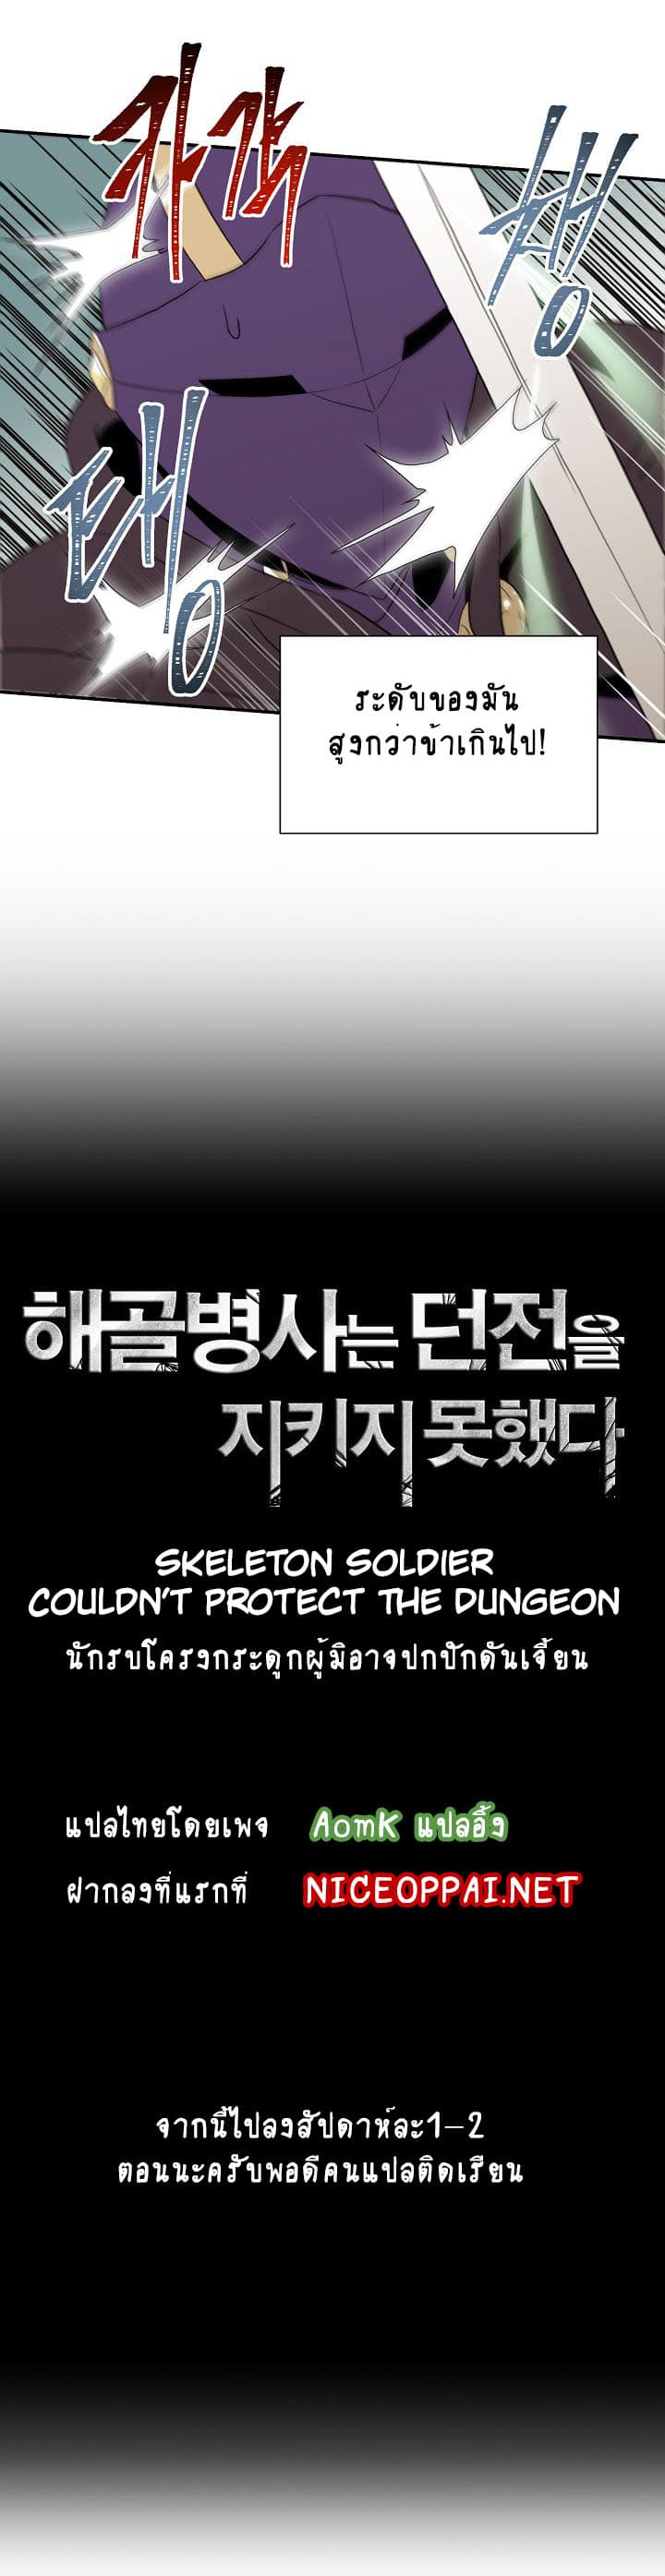 Skeleton Soldier27 (4)